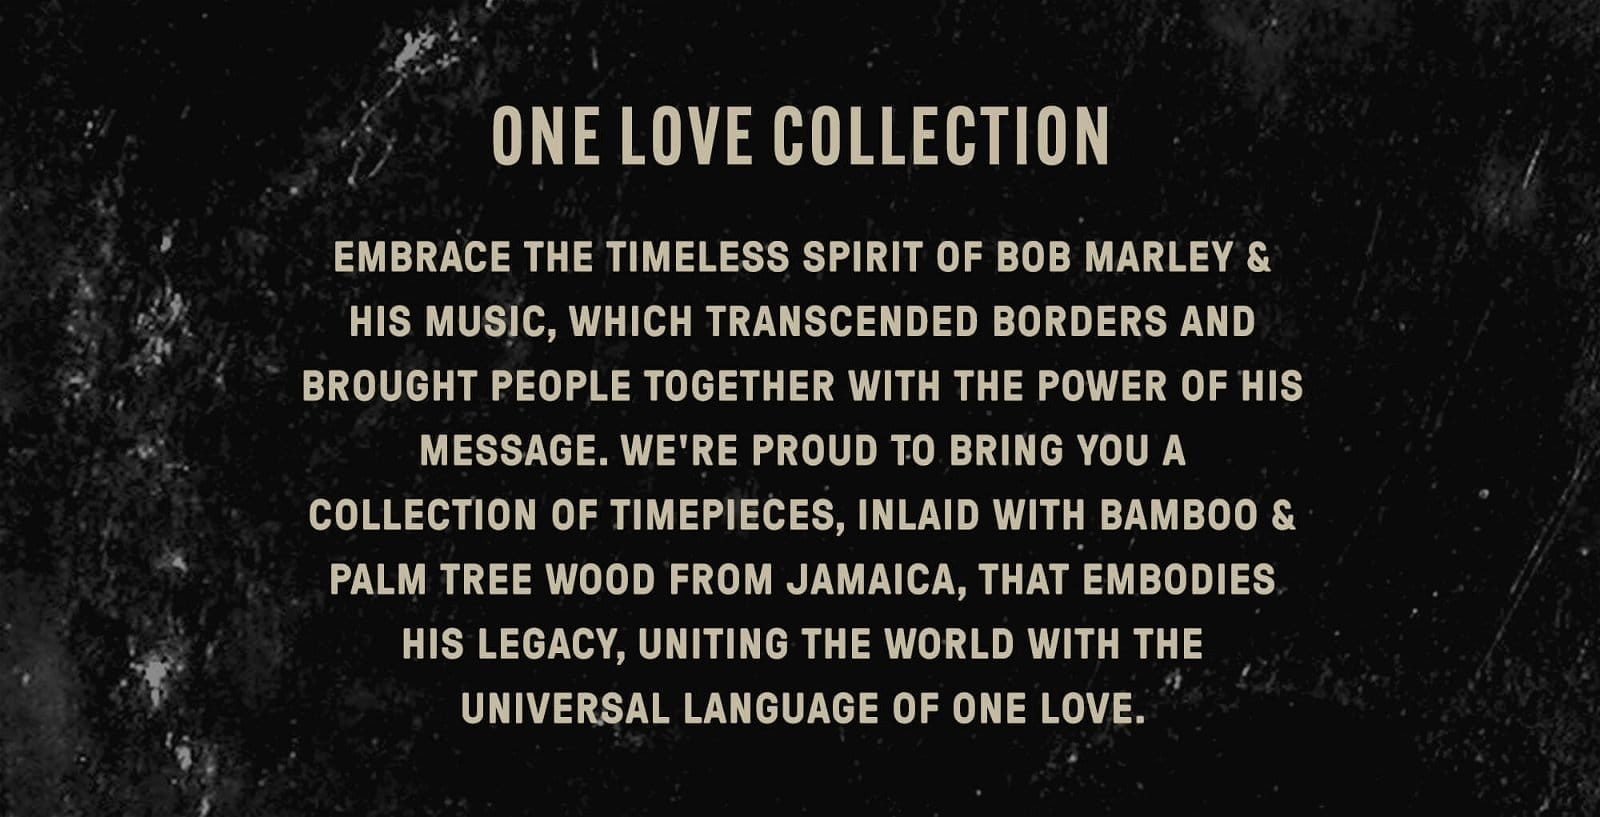 Original Grain x Bob Marley - One Love Collection